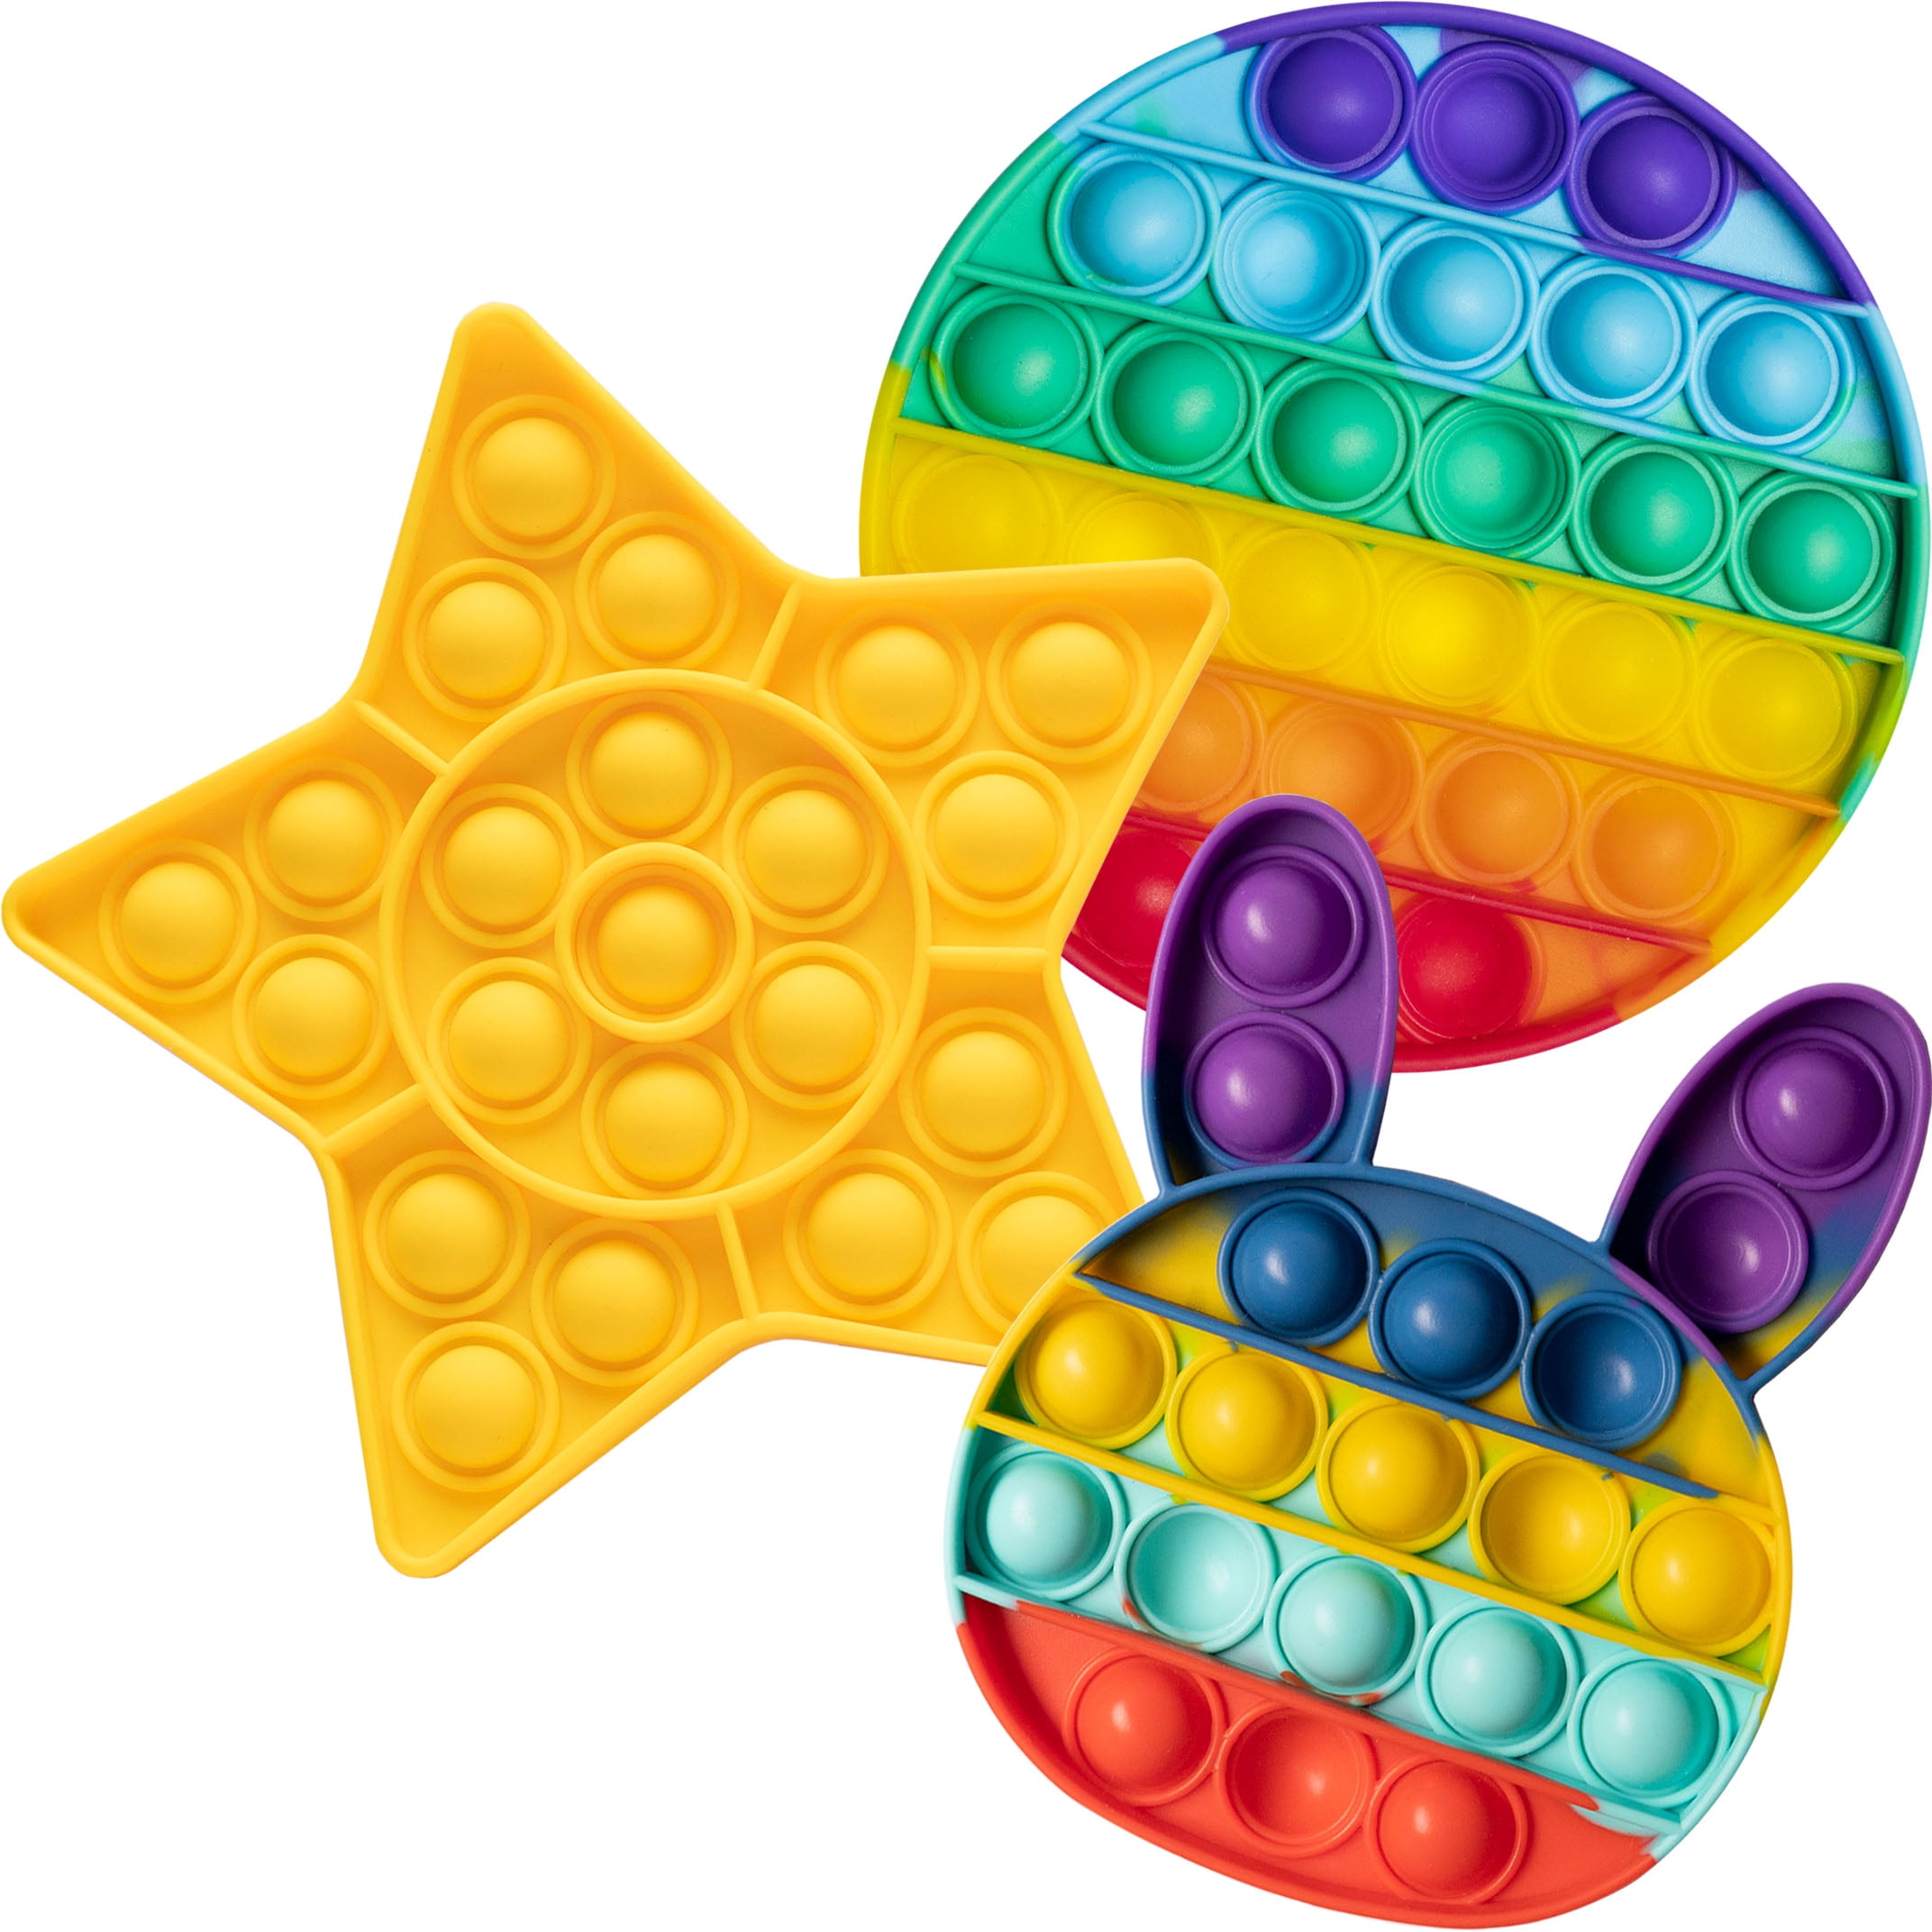 Adult Anxiety Relief Sensory Toy D Stress Relief toyolar System Simple Fidget Pop Planet Bubble Fidget Toys VingTank 4pcs Latest Children's Stress Ball Toy 